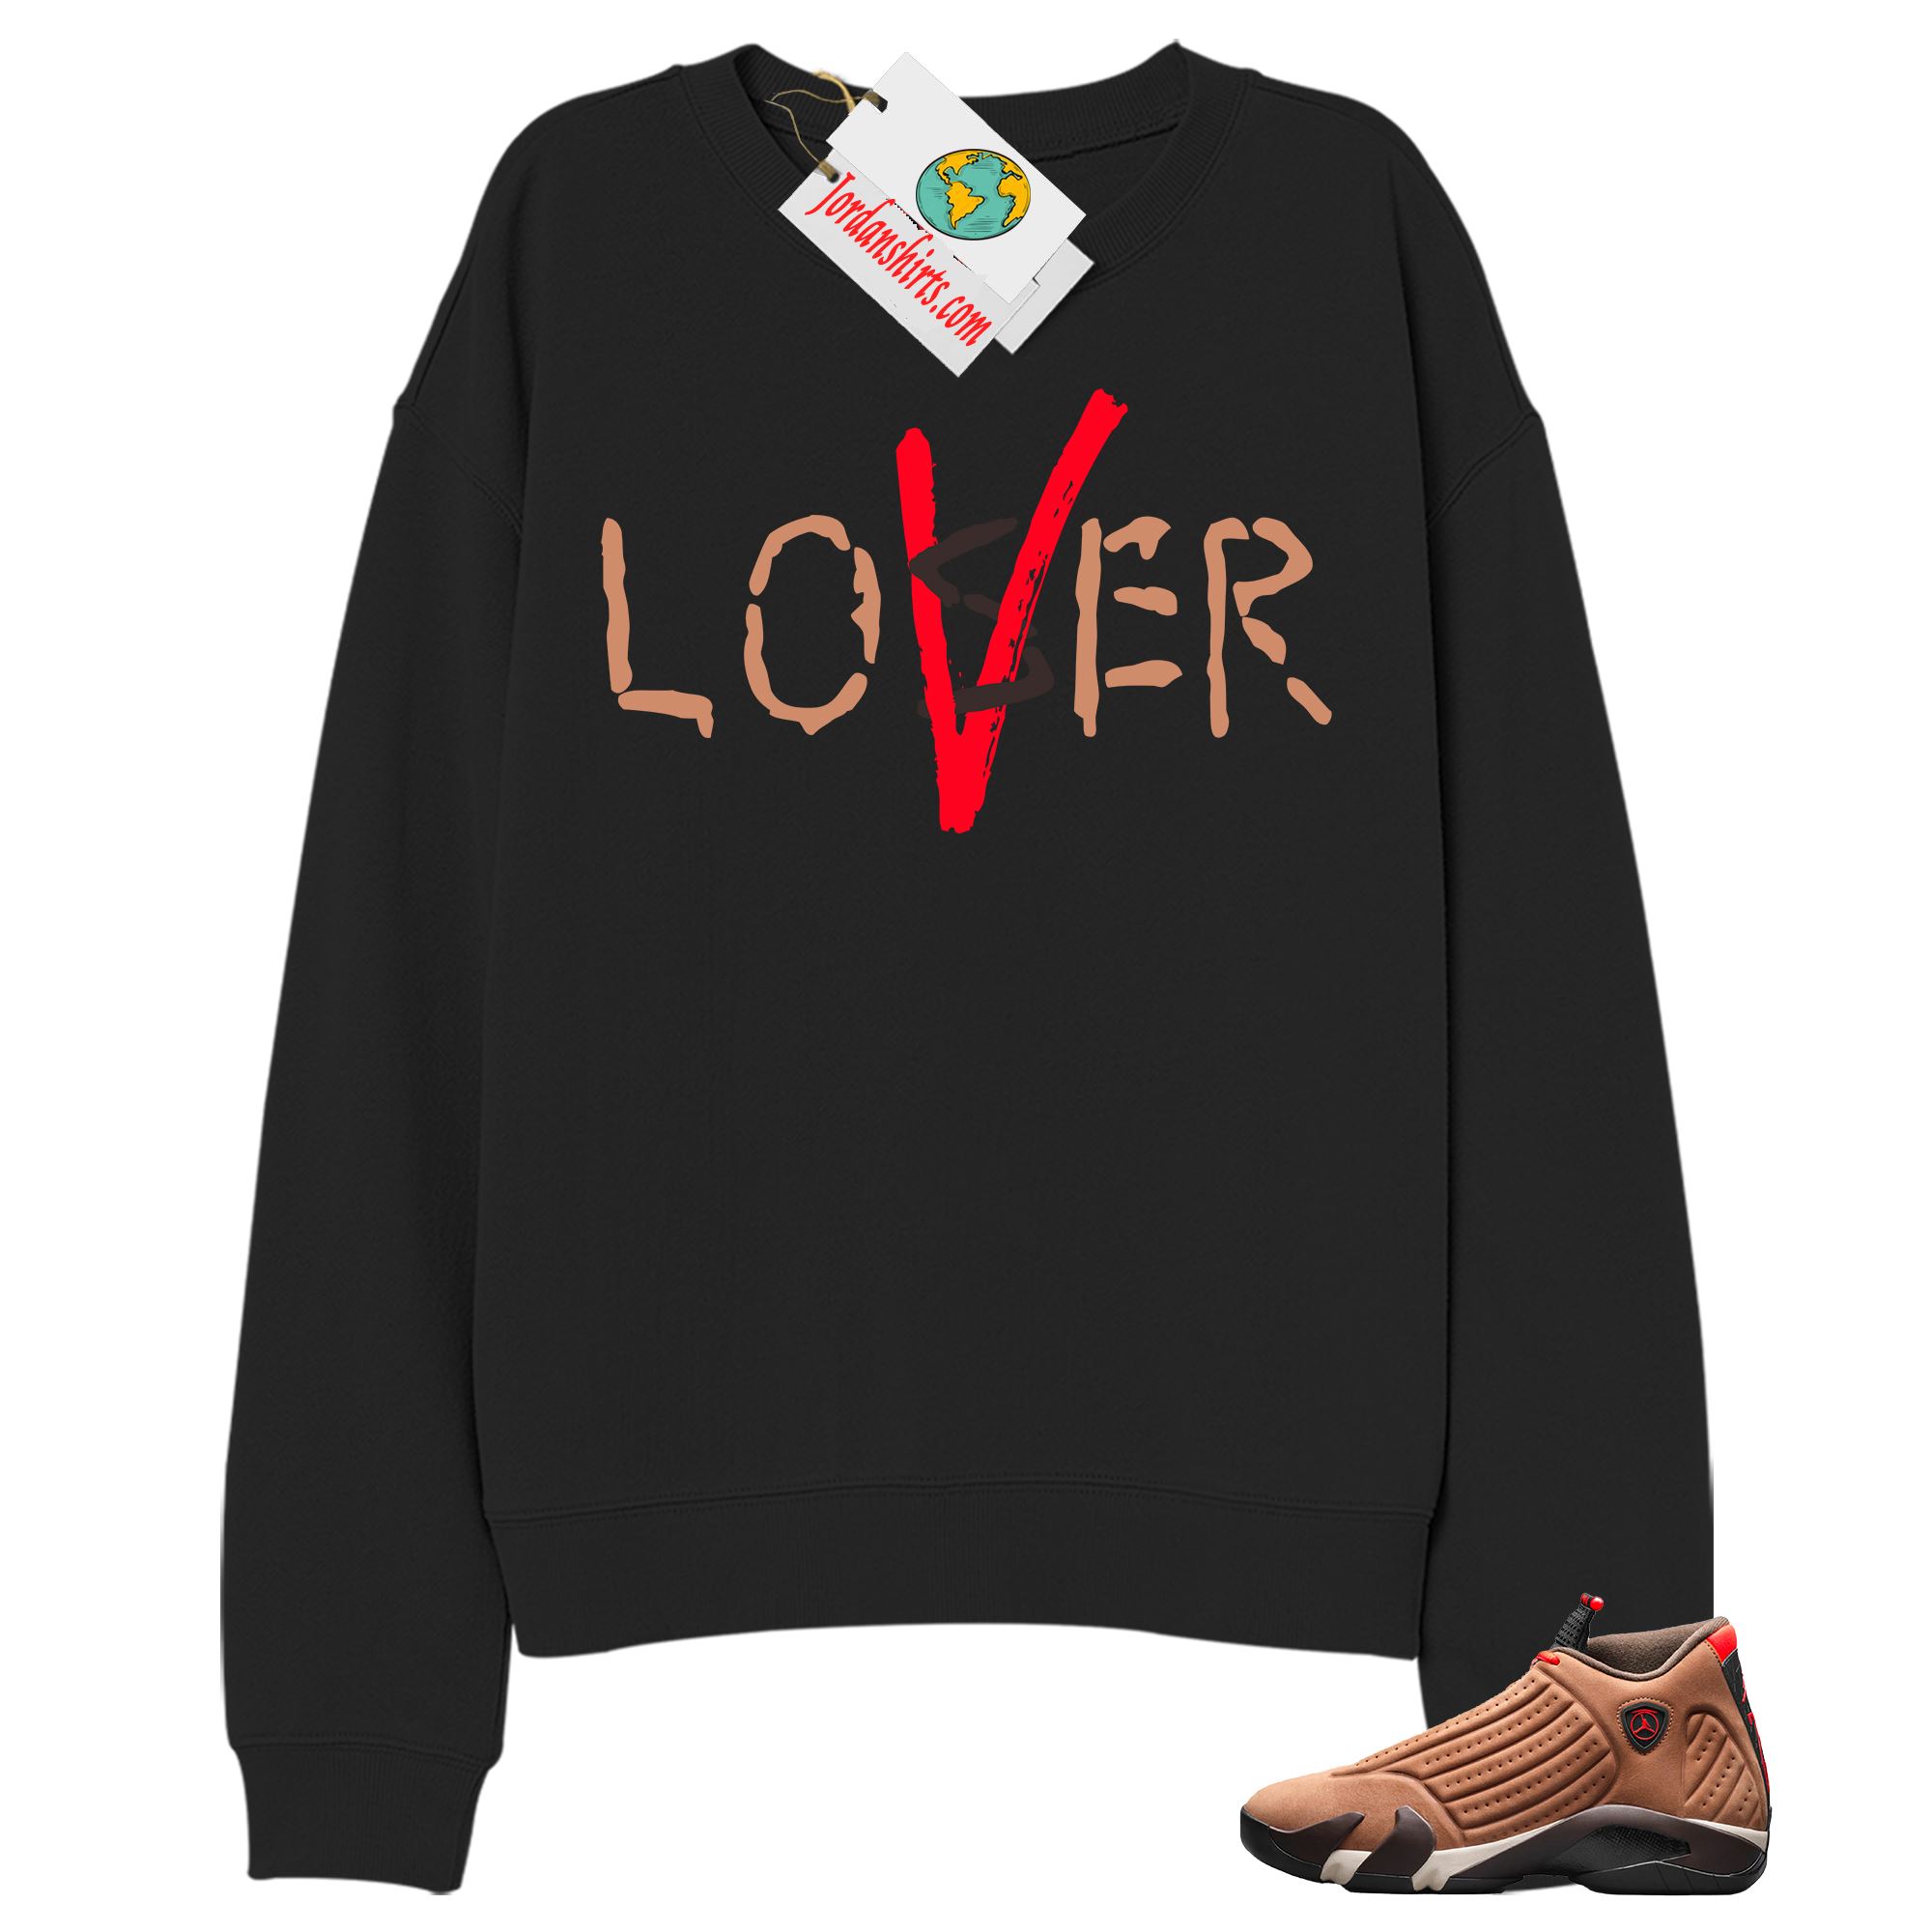 Jordan 14 Sweatshirt, Love A Loser Black Sweatshirt Air Jordan 14 Winterized 14s Full Size Up To 5xl